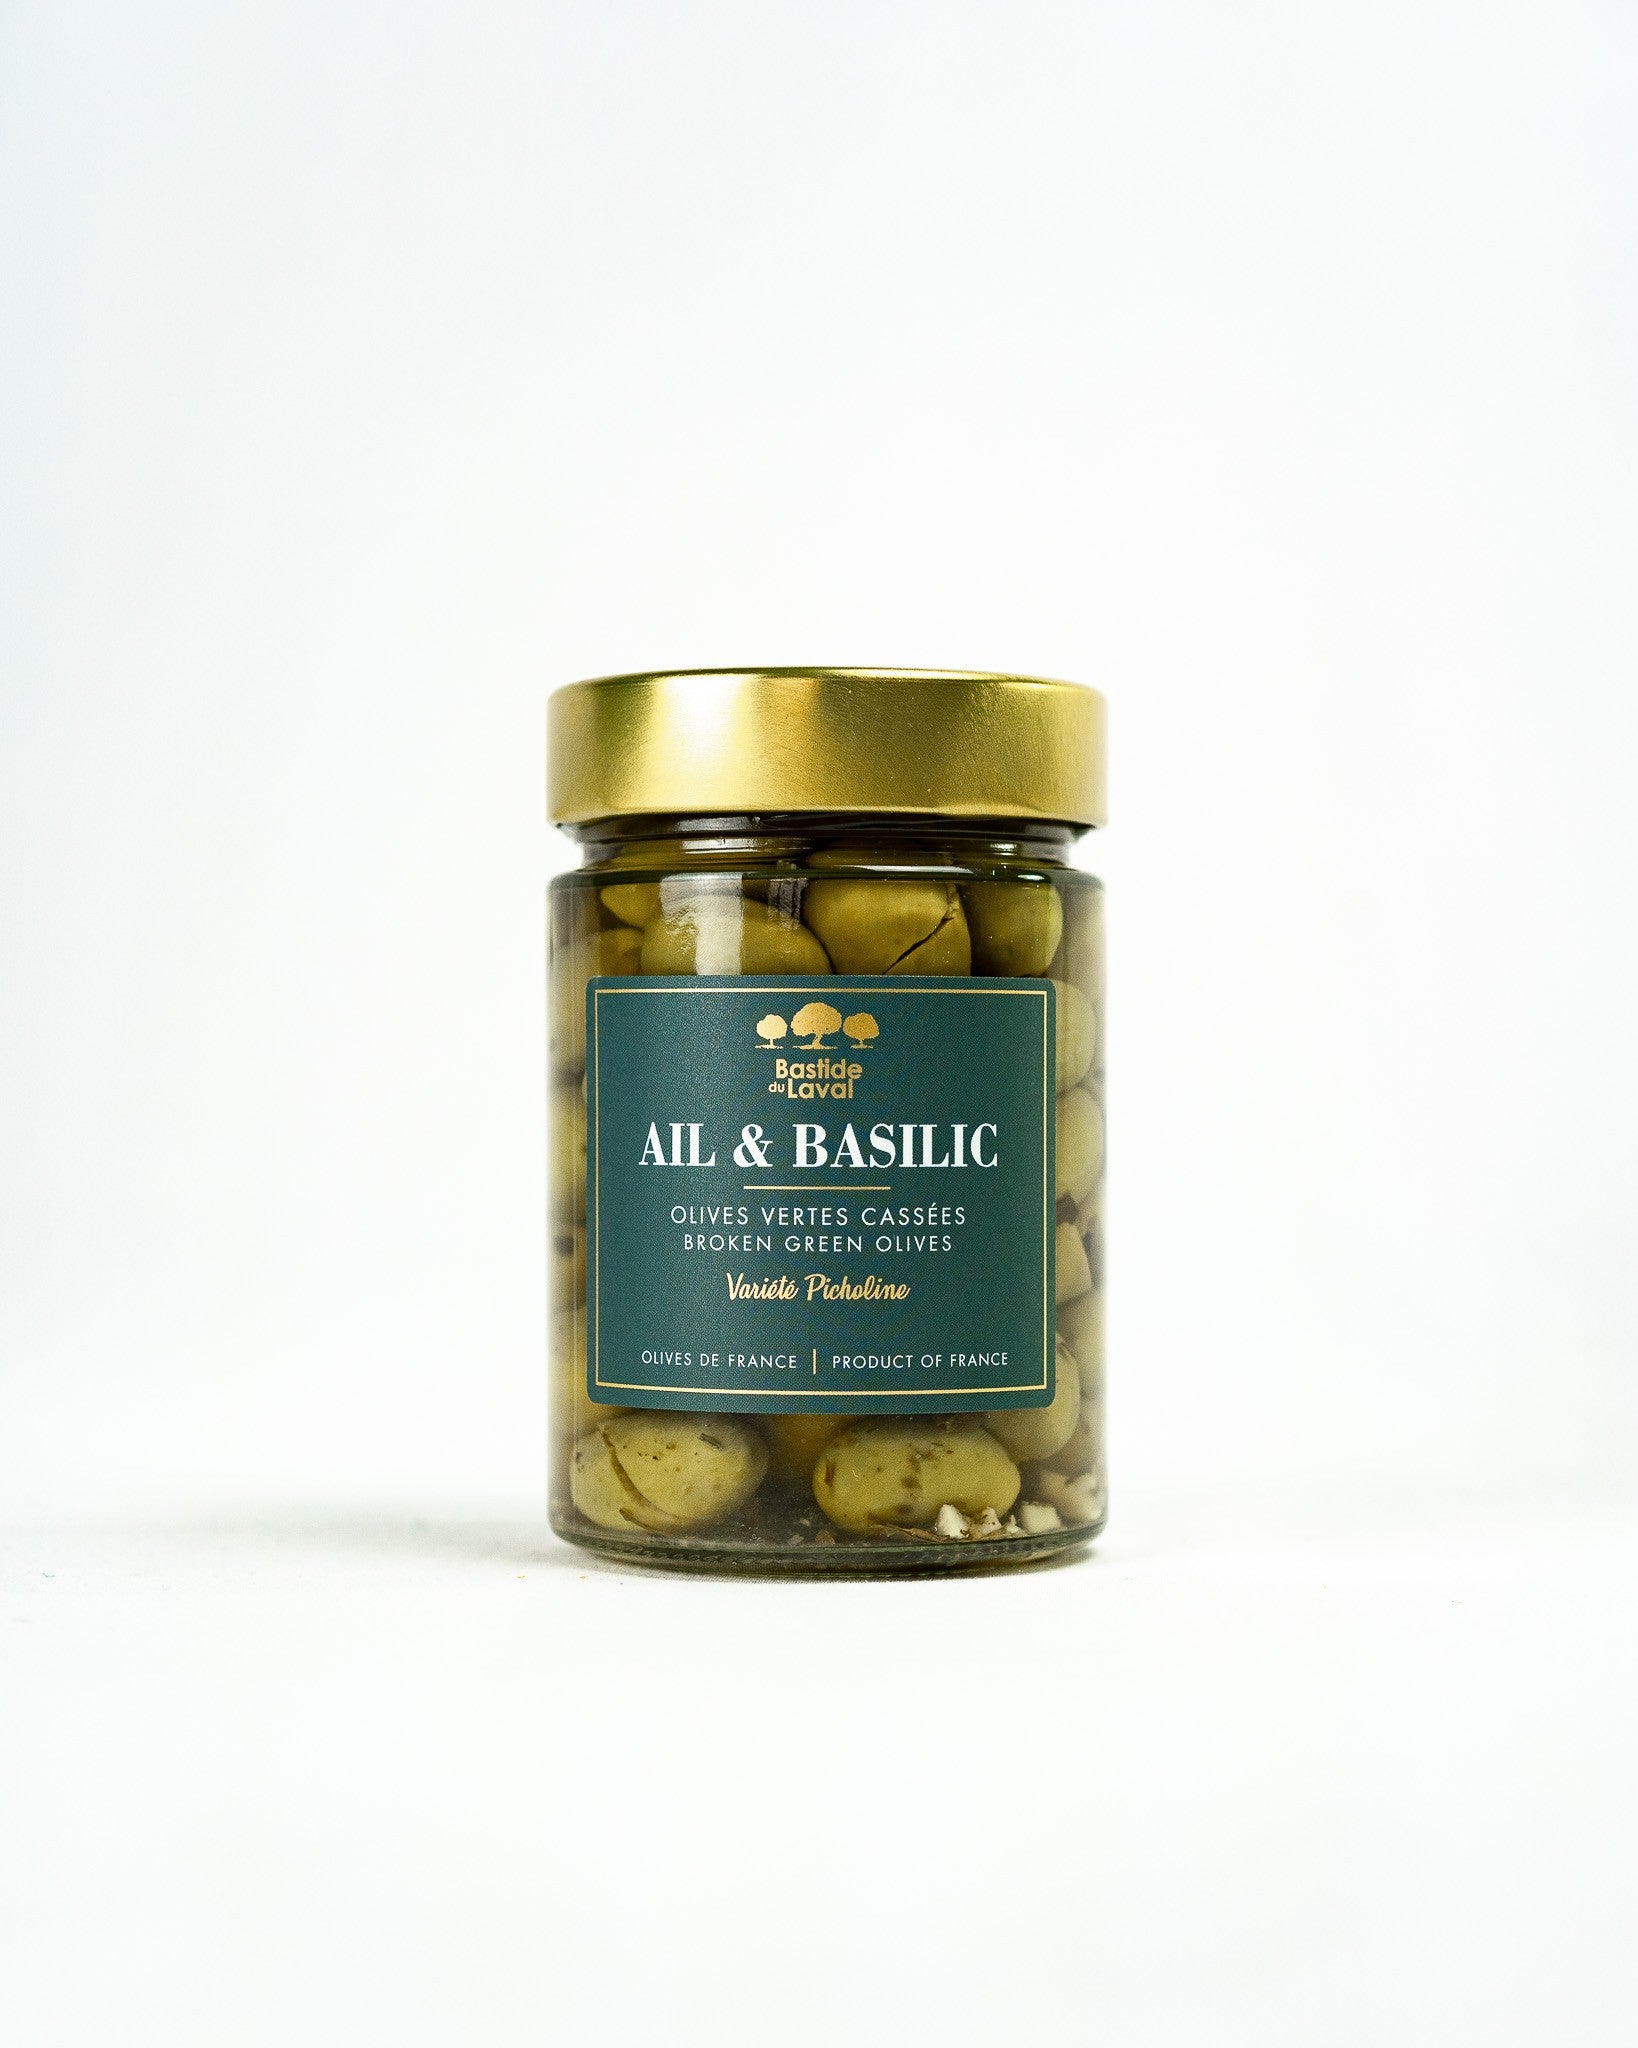 Gebrochene Picholine-Oliven, Knoblauch, Basilikum